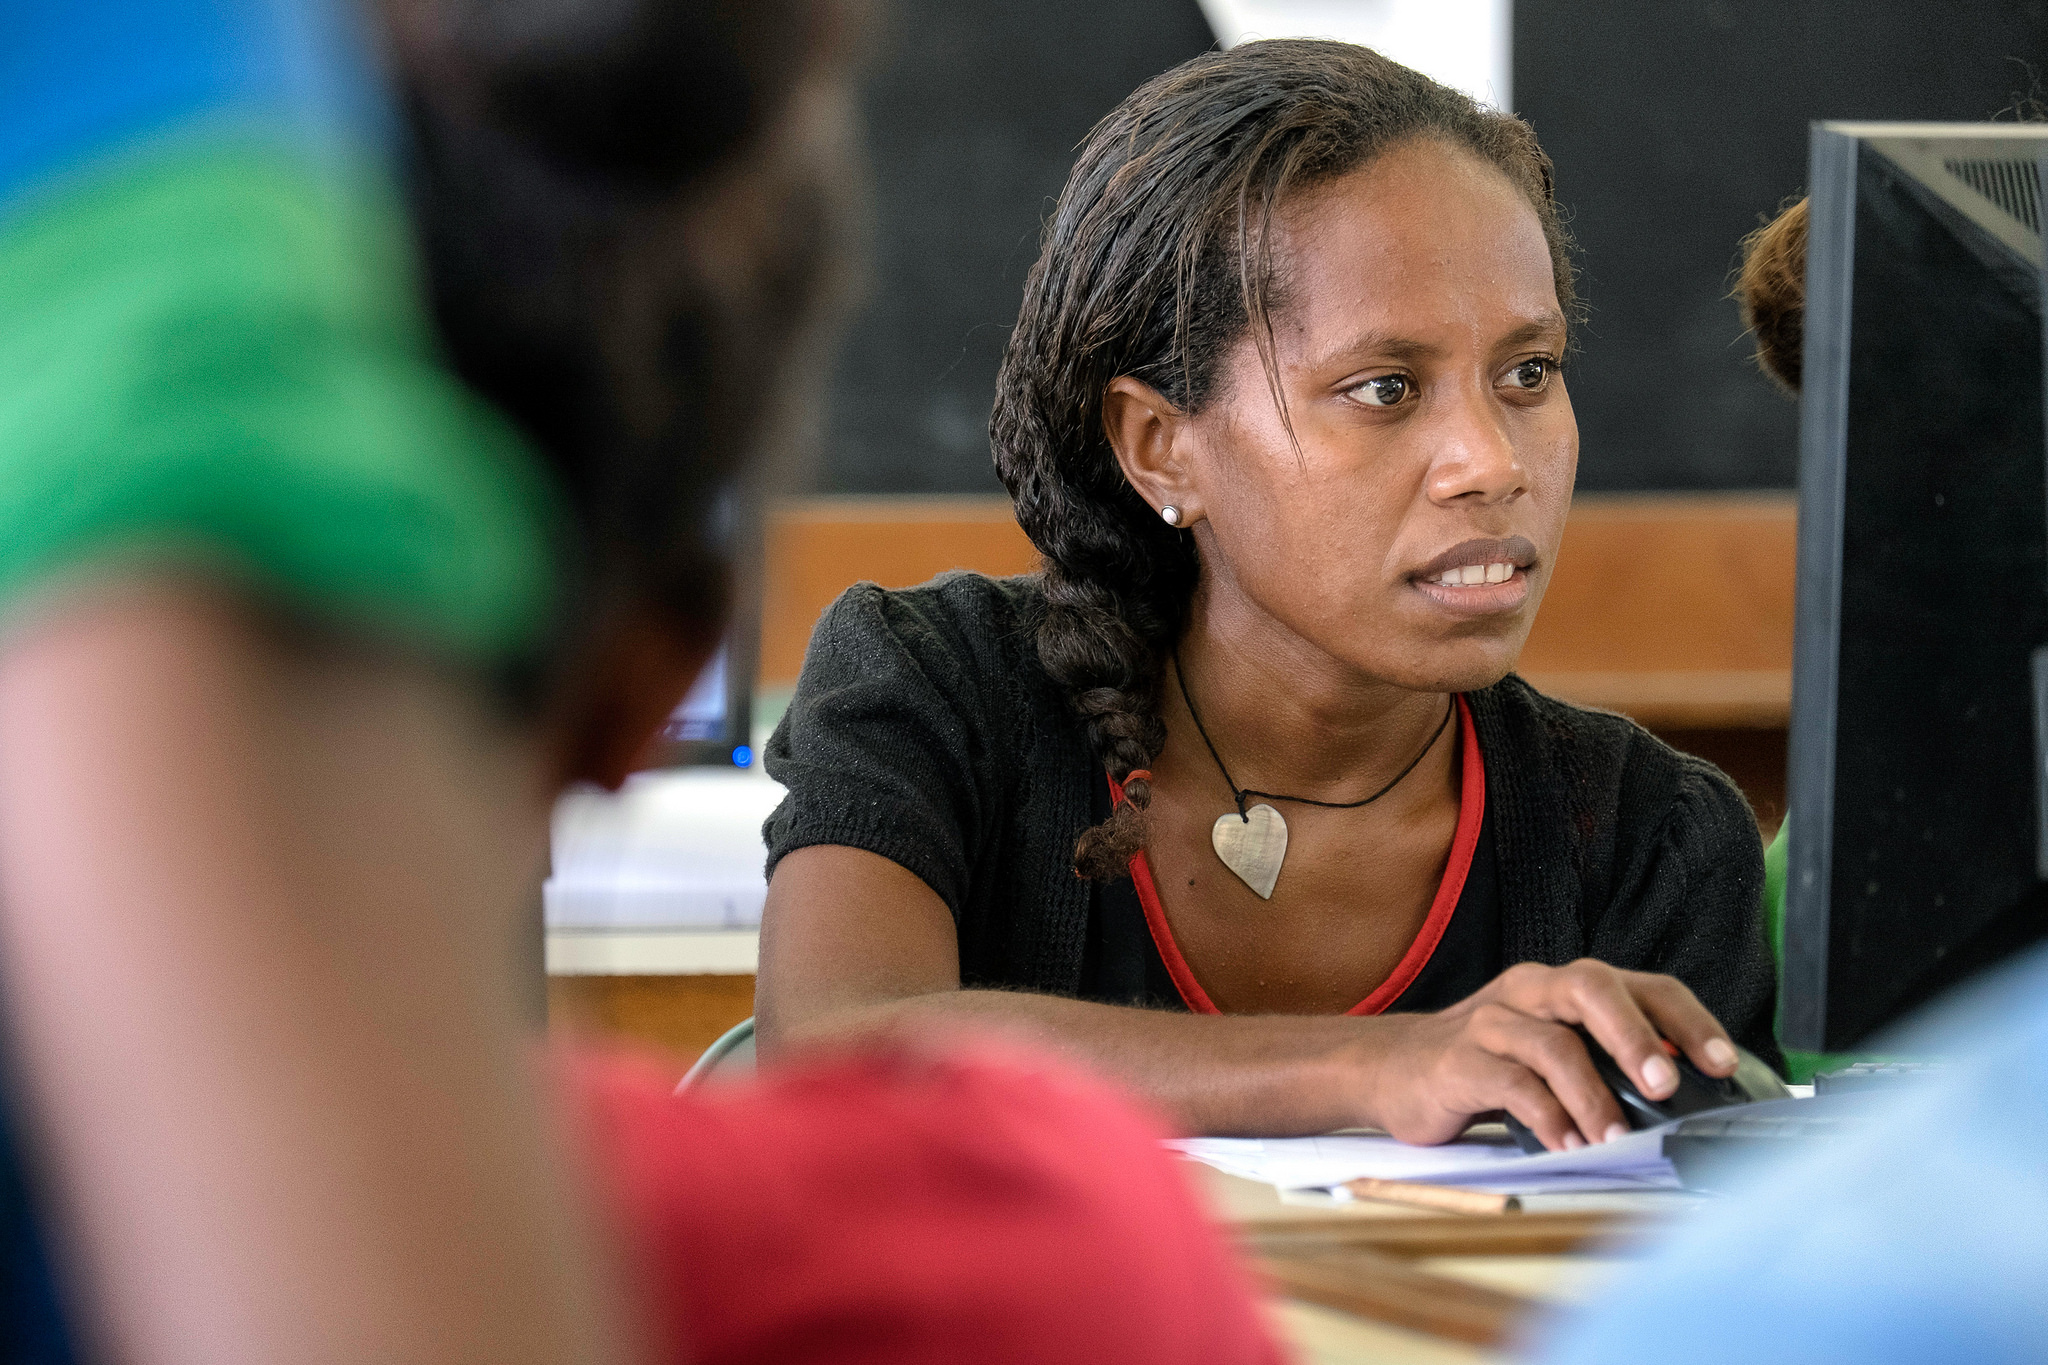 Student in USP computer lab, Solomon Islands (ADB/Flickr CC BY-NC-ND 2.0)